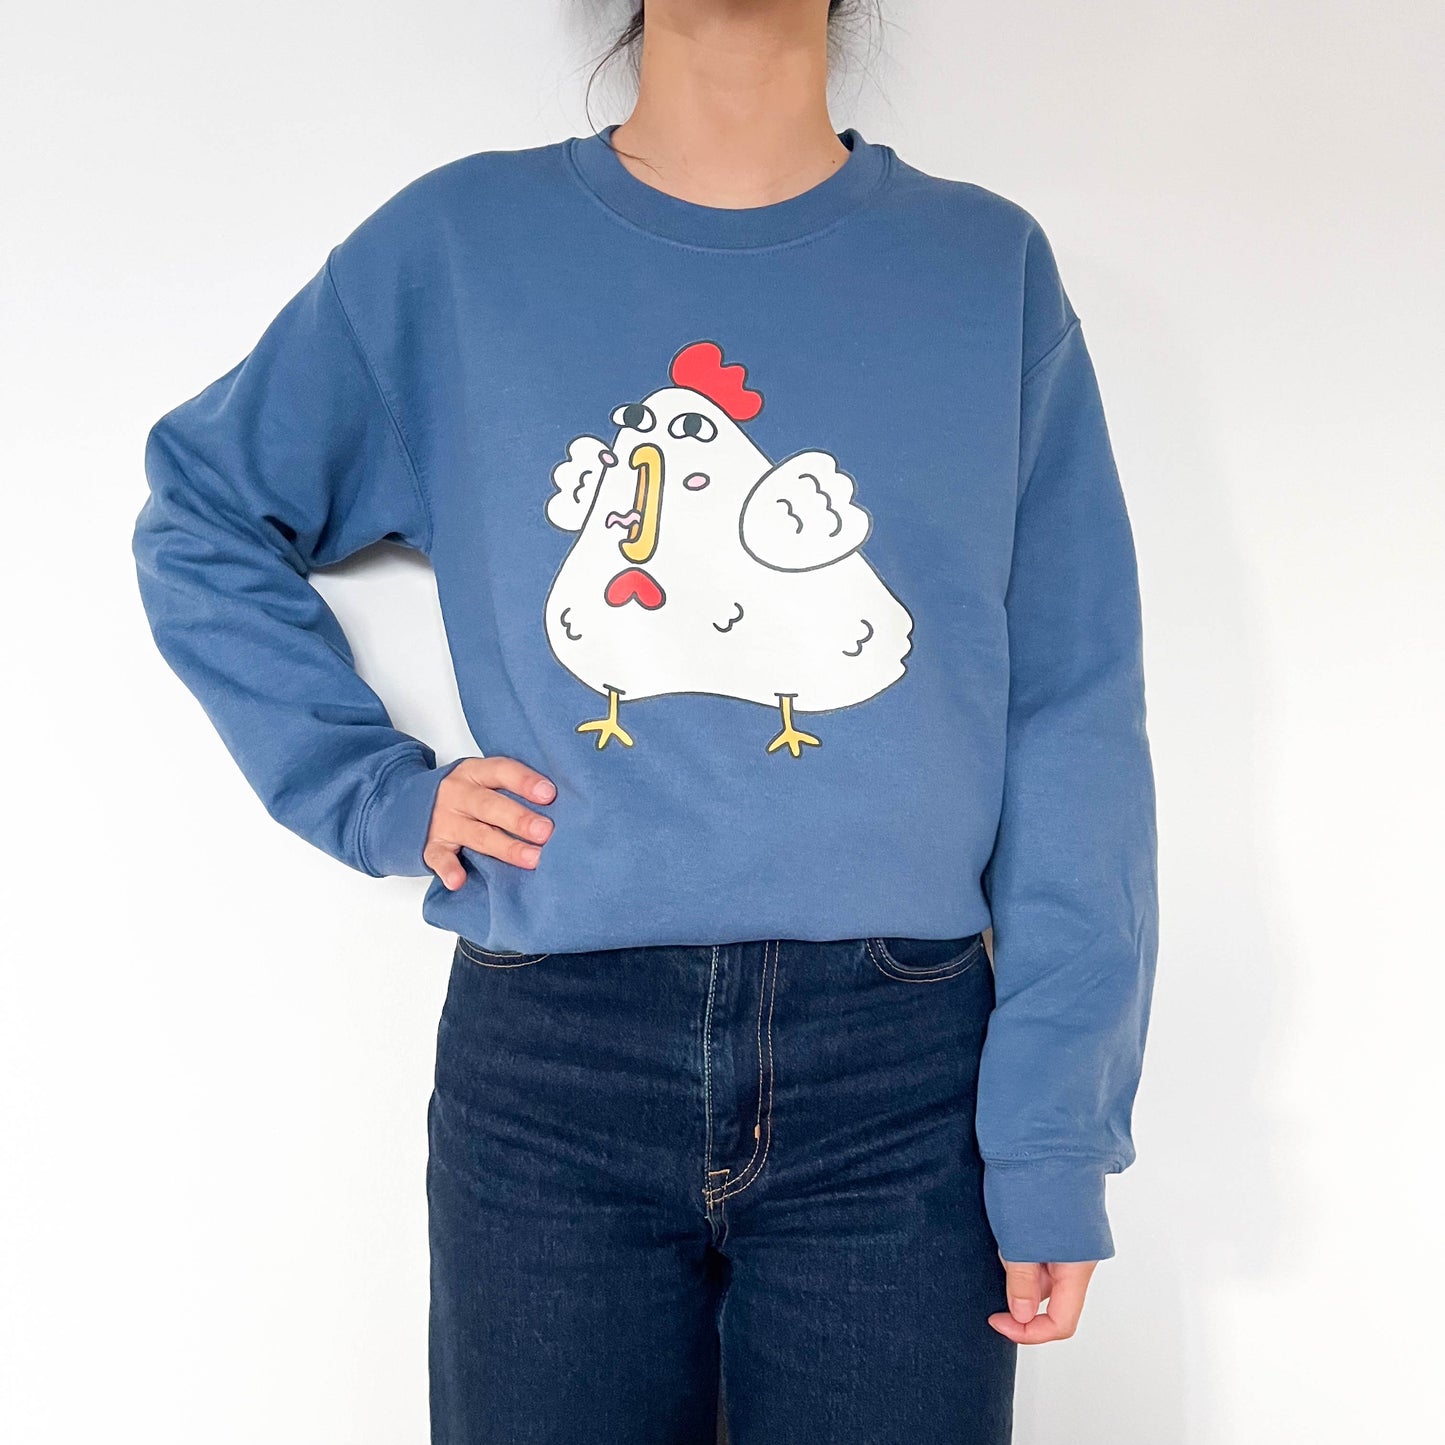 Screaming Chicken Sweater Big Logo